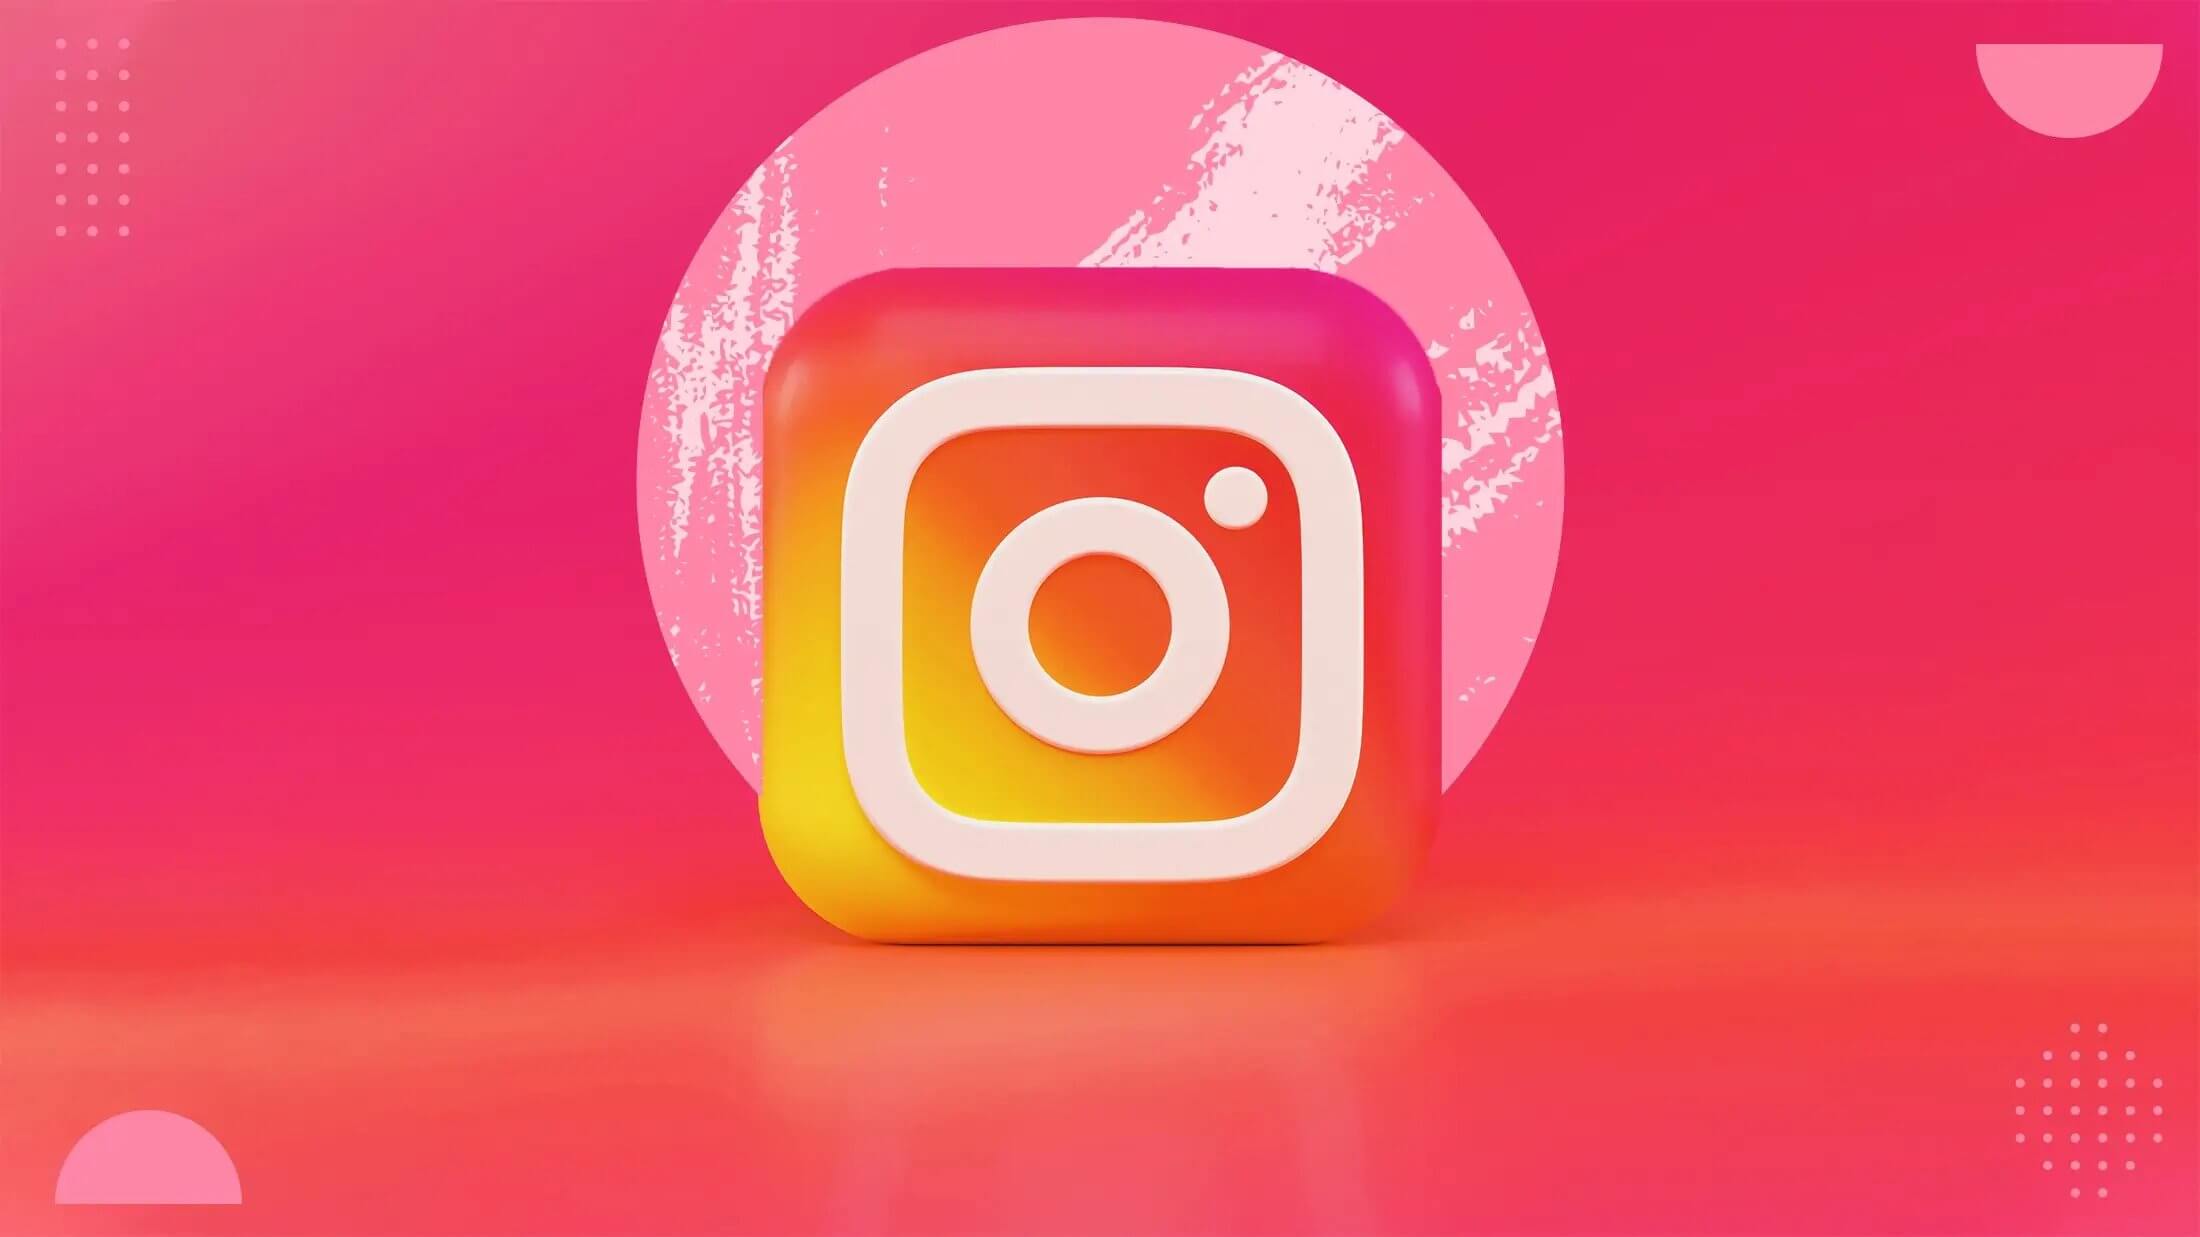 Instagram story hacks